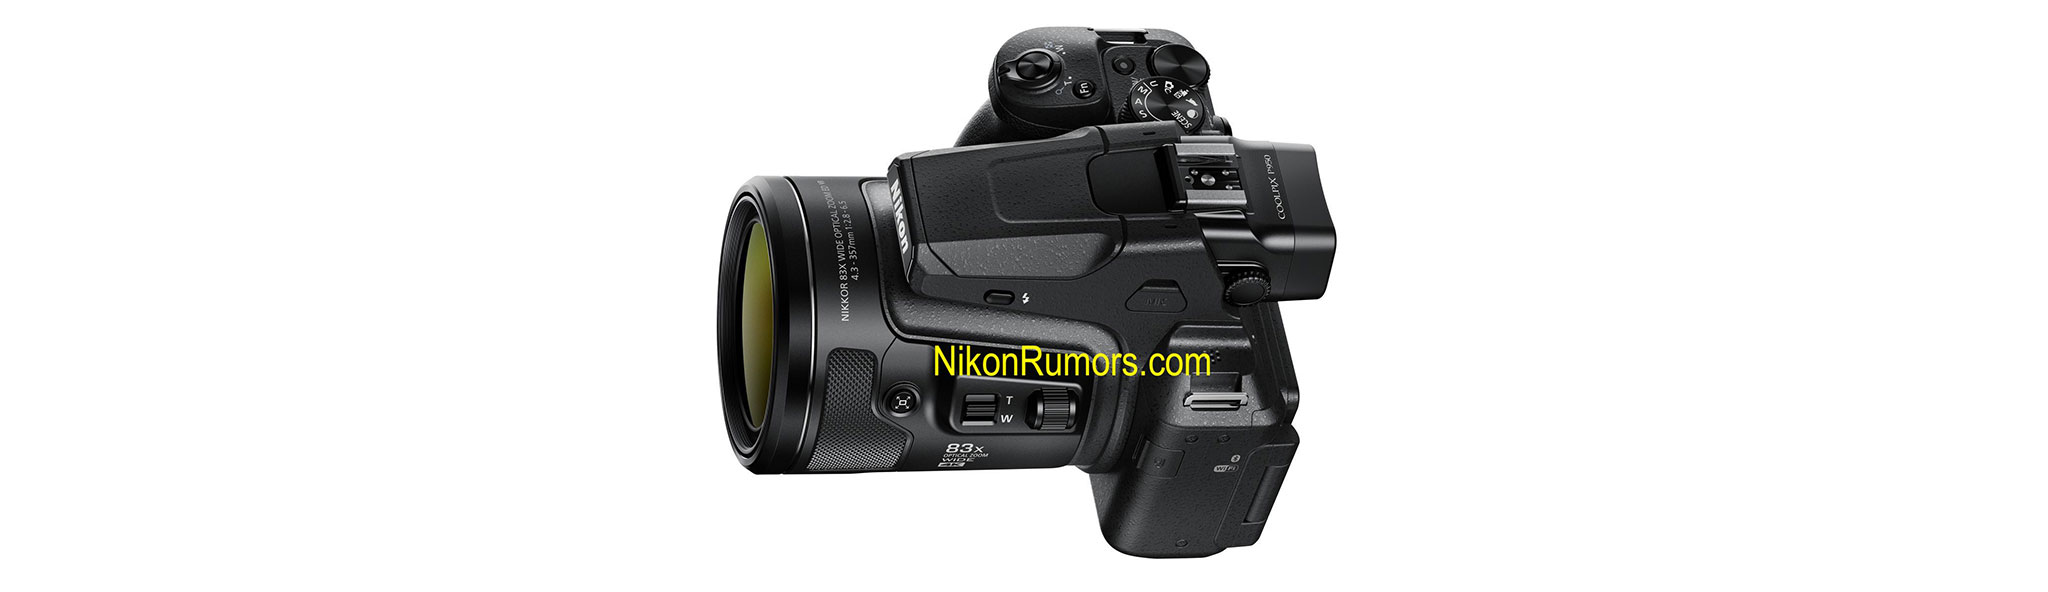 Nikon-Coolpix-P950-camera-3.jpg